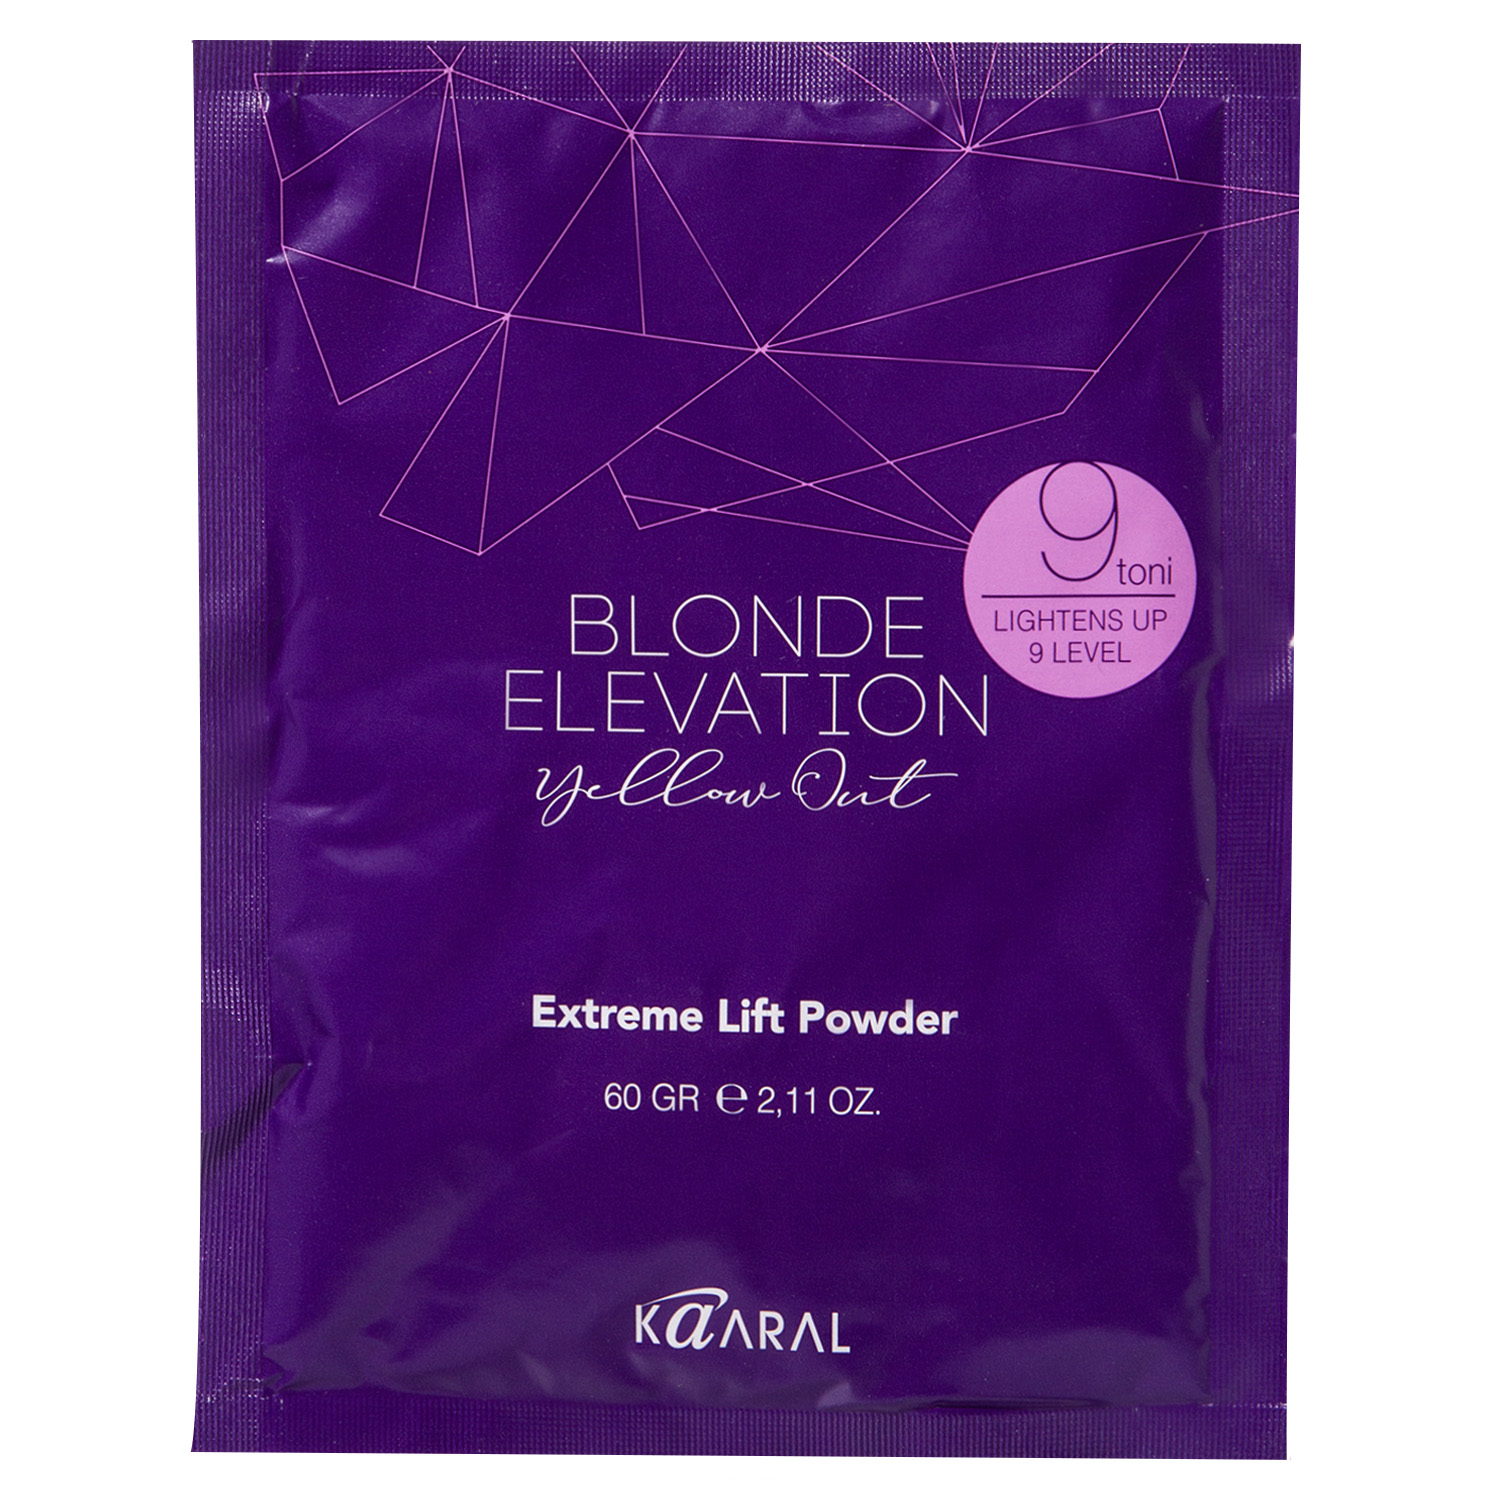 Kaaral Обесцвечивающий порошок Extreme Lift Powder, 60 г (Kaaral, Blonde Elevation), Италия  - Купить